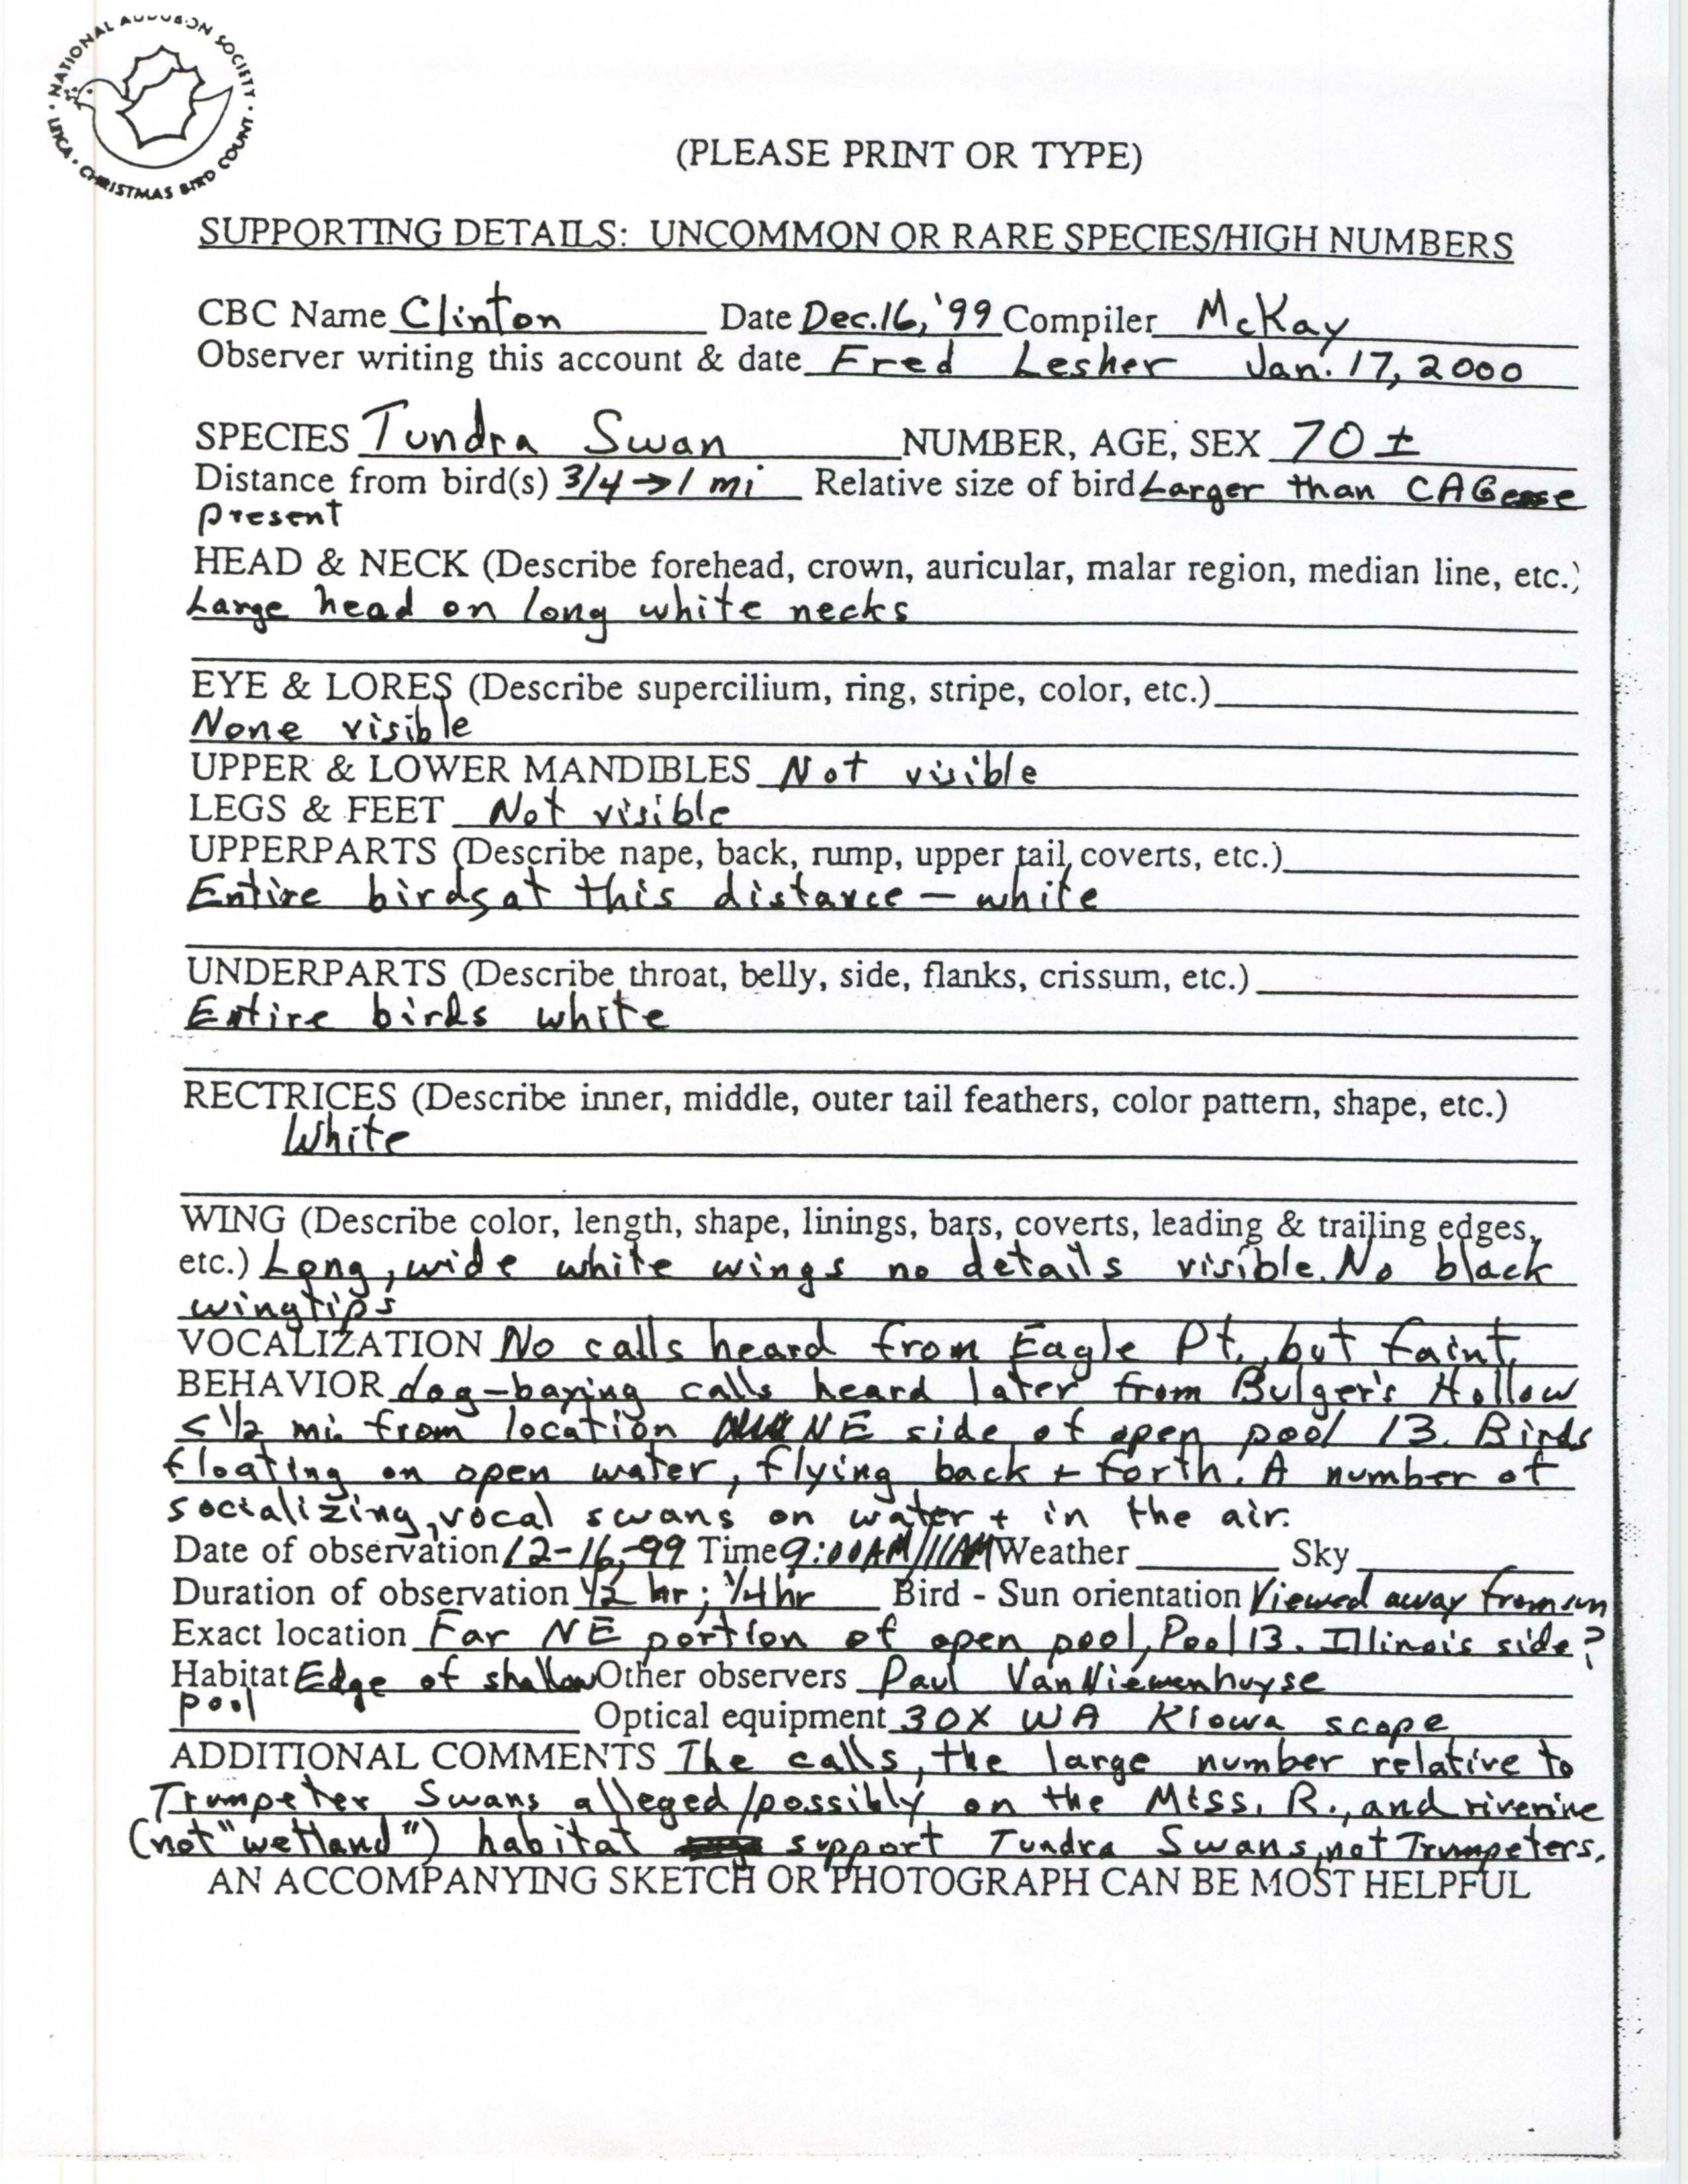 Rare bird documentation form for Tundra Swan at Pool 13, 1999